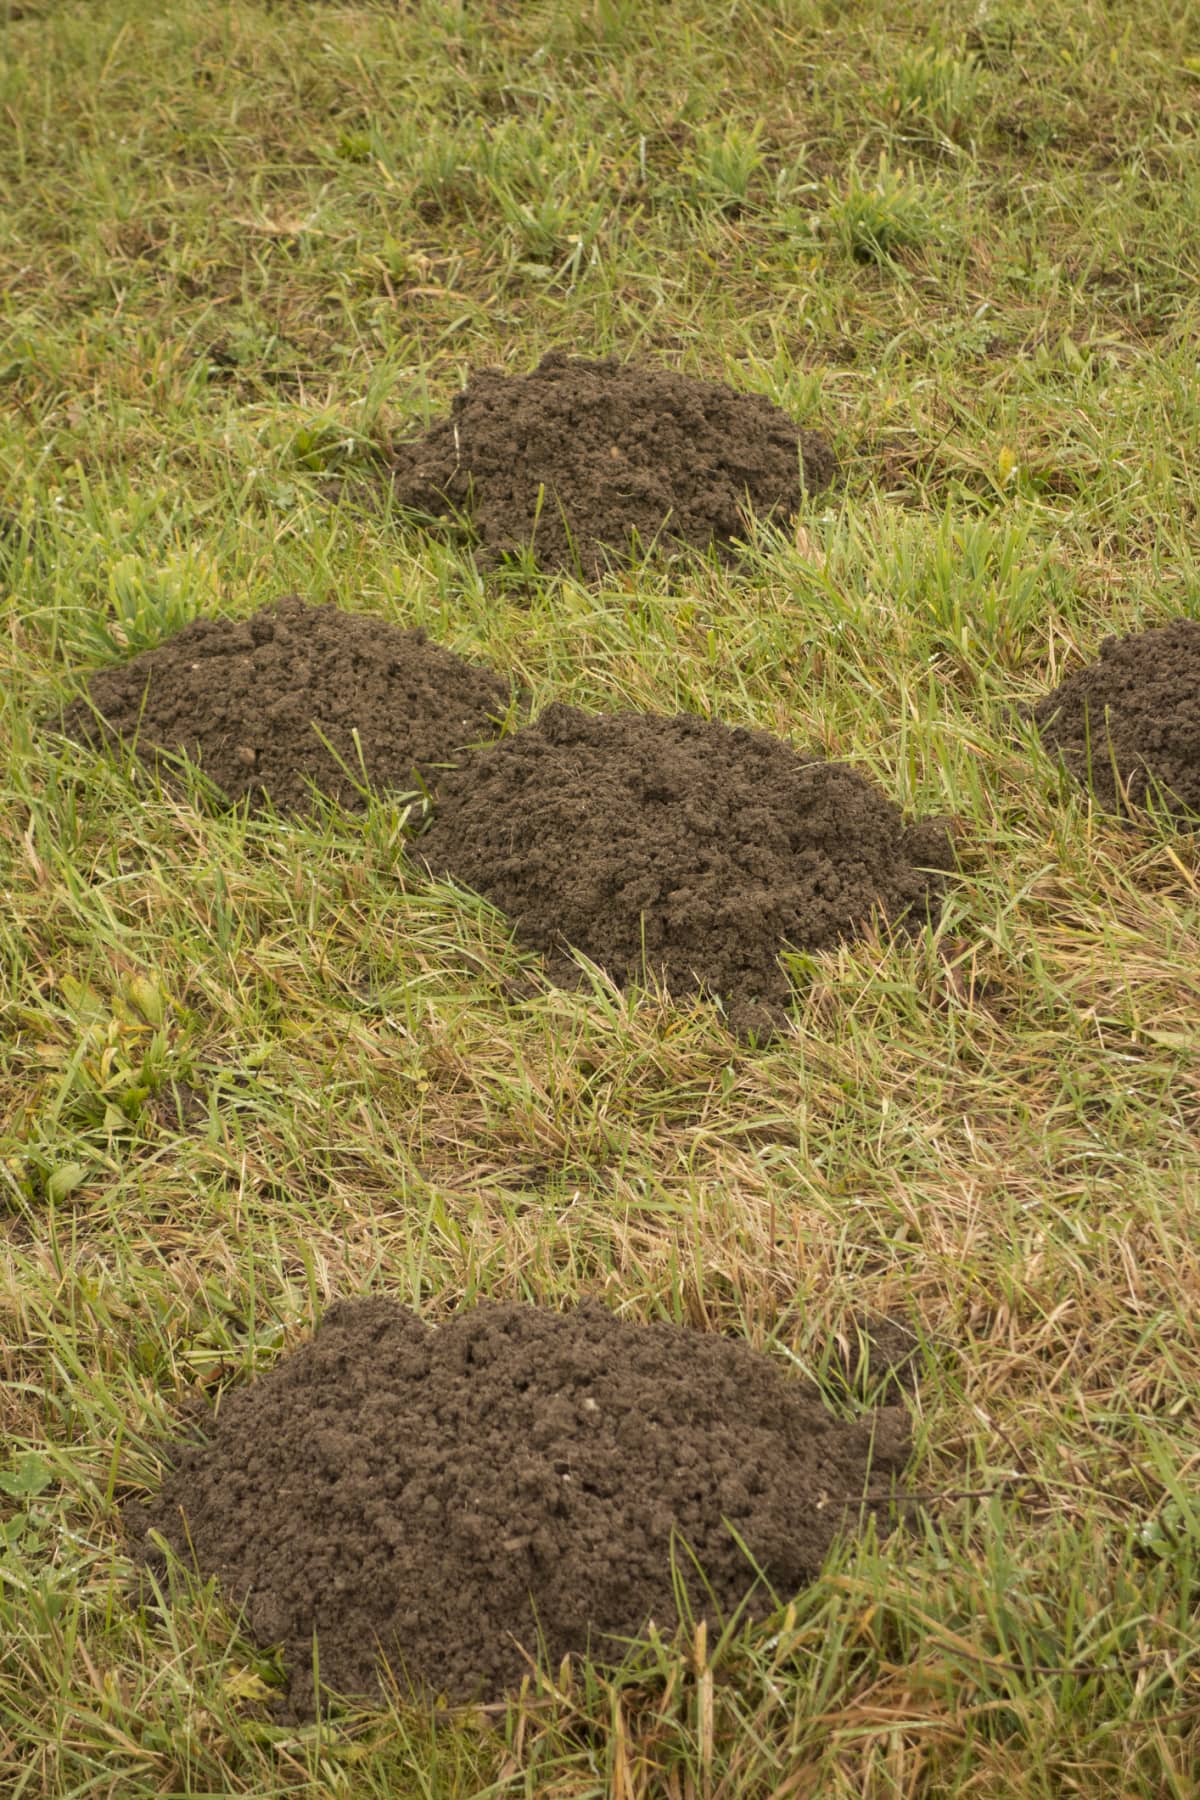 Holes on the ground dug by suspicious wildlife